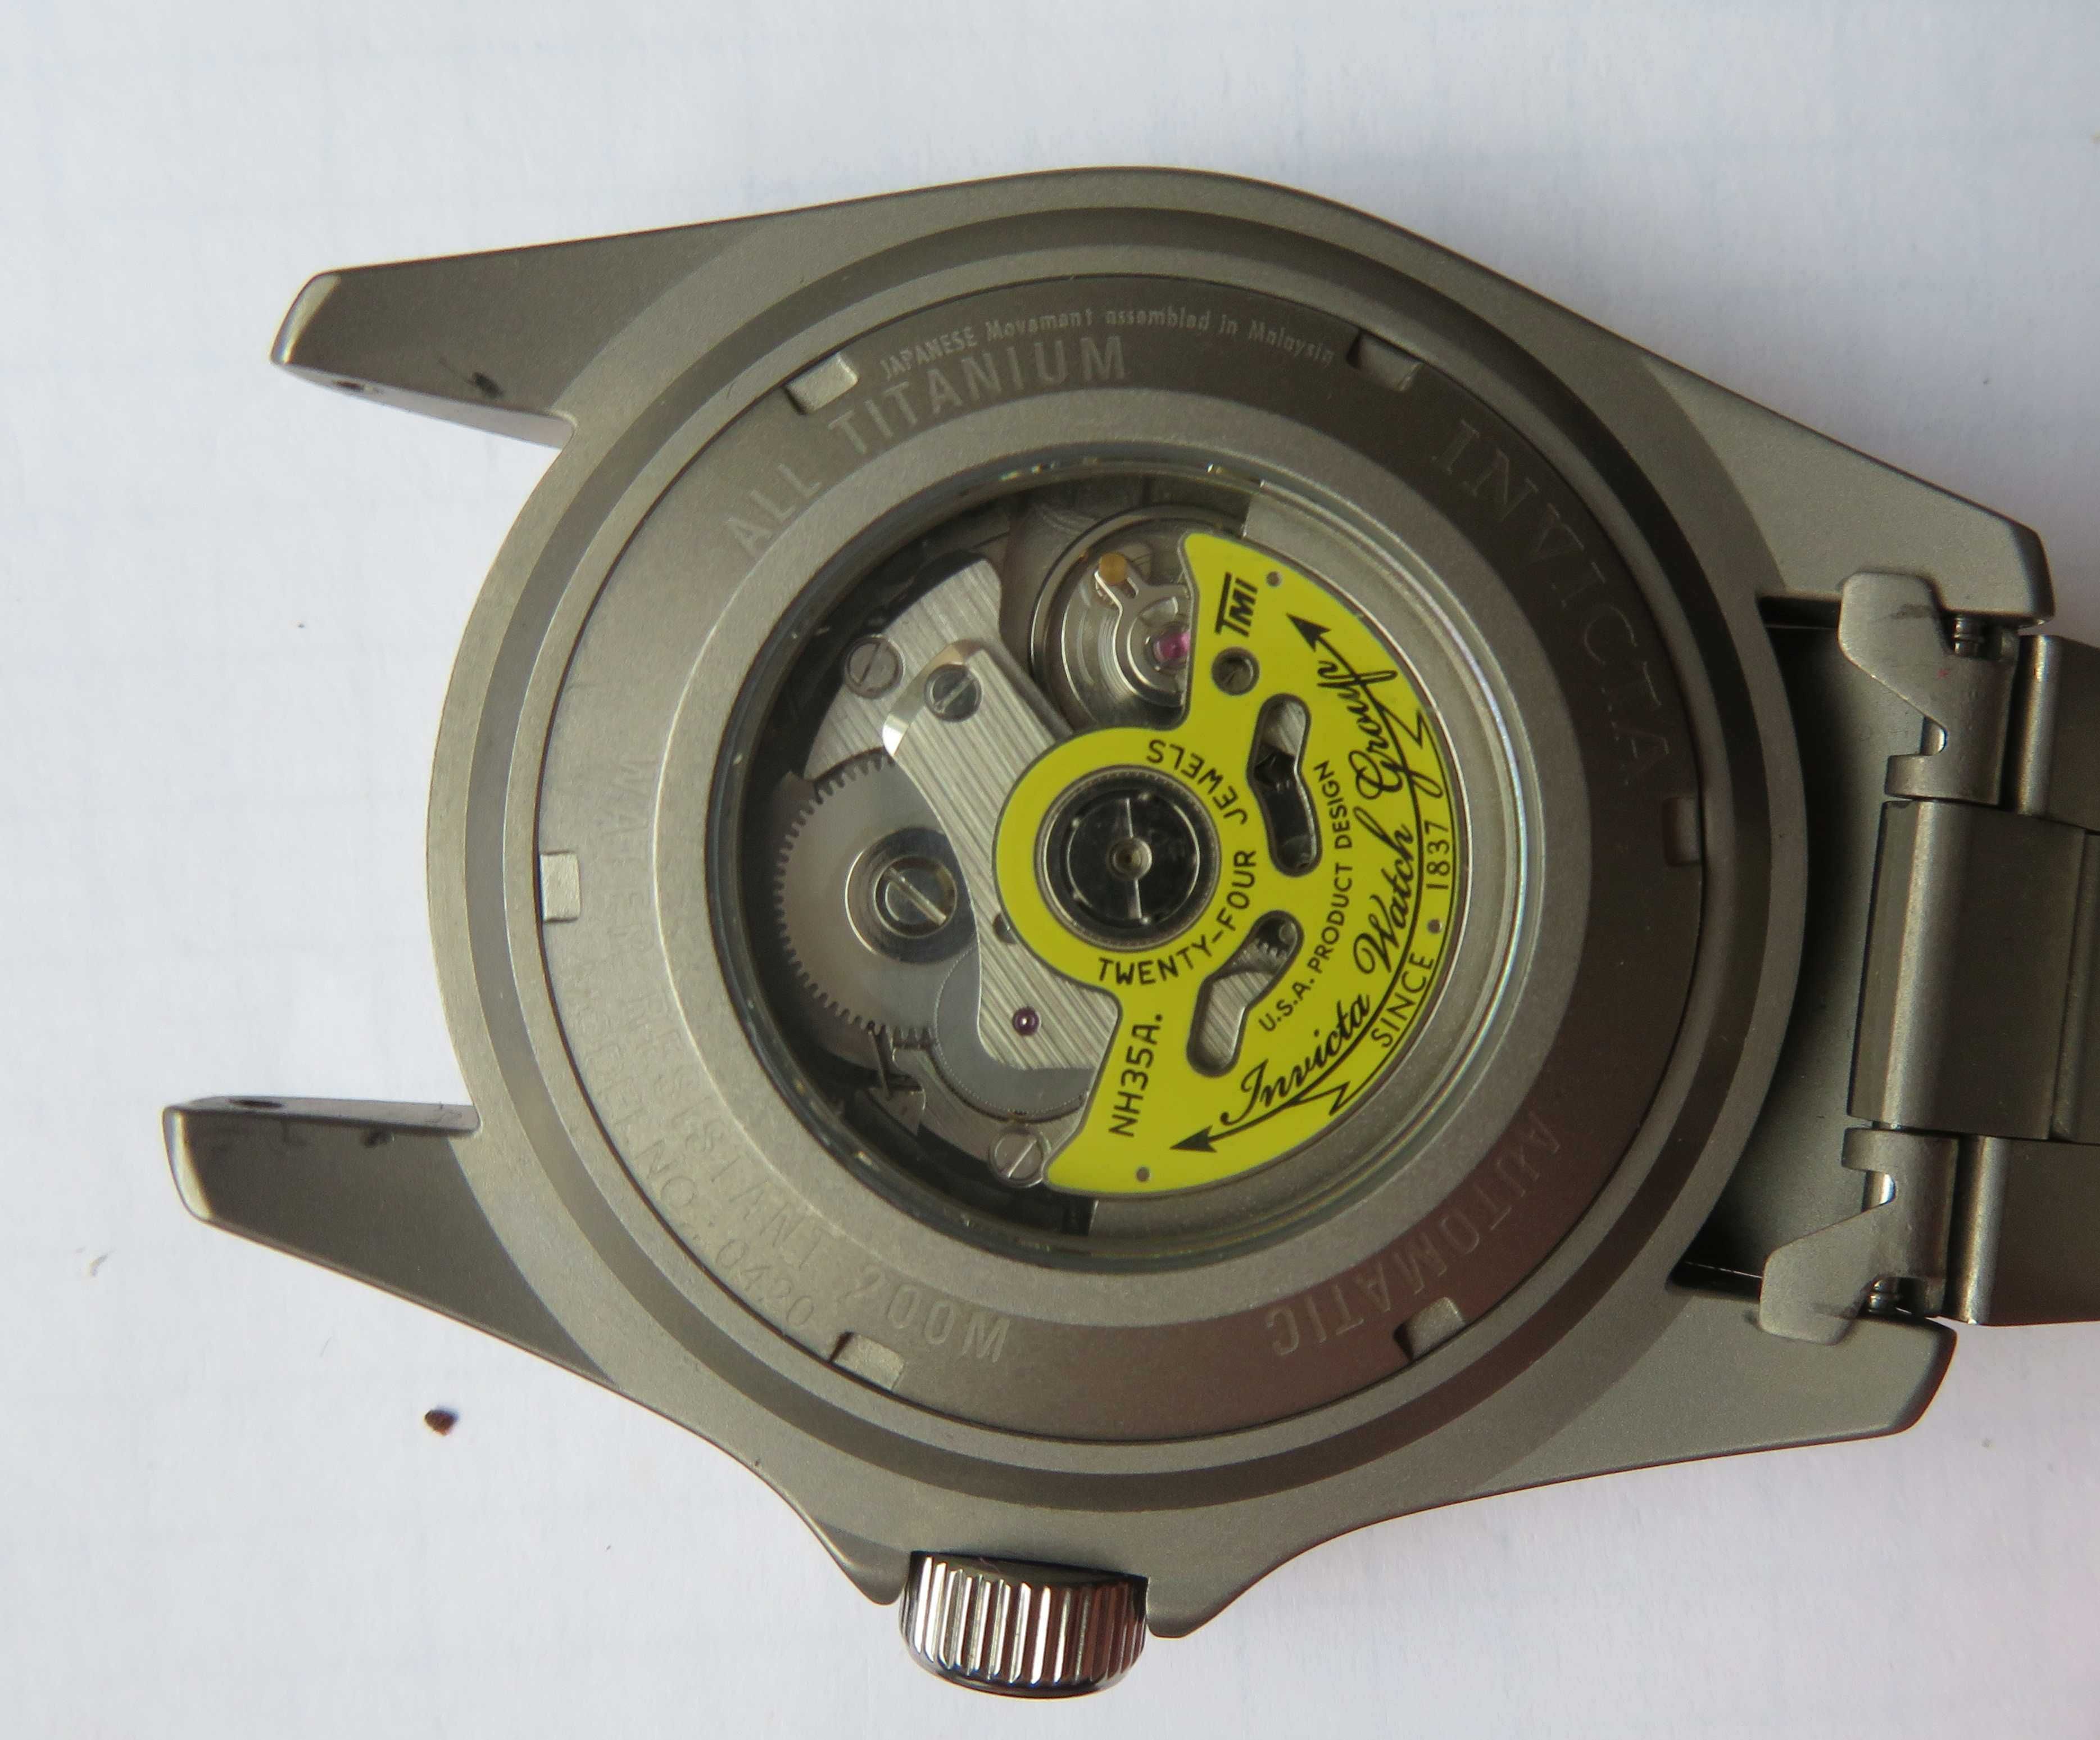 Zegarek diver  Invicta  Titanium tytan wr 200